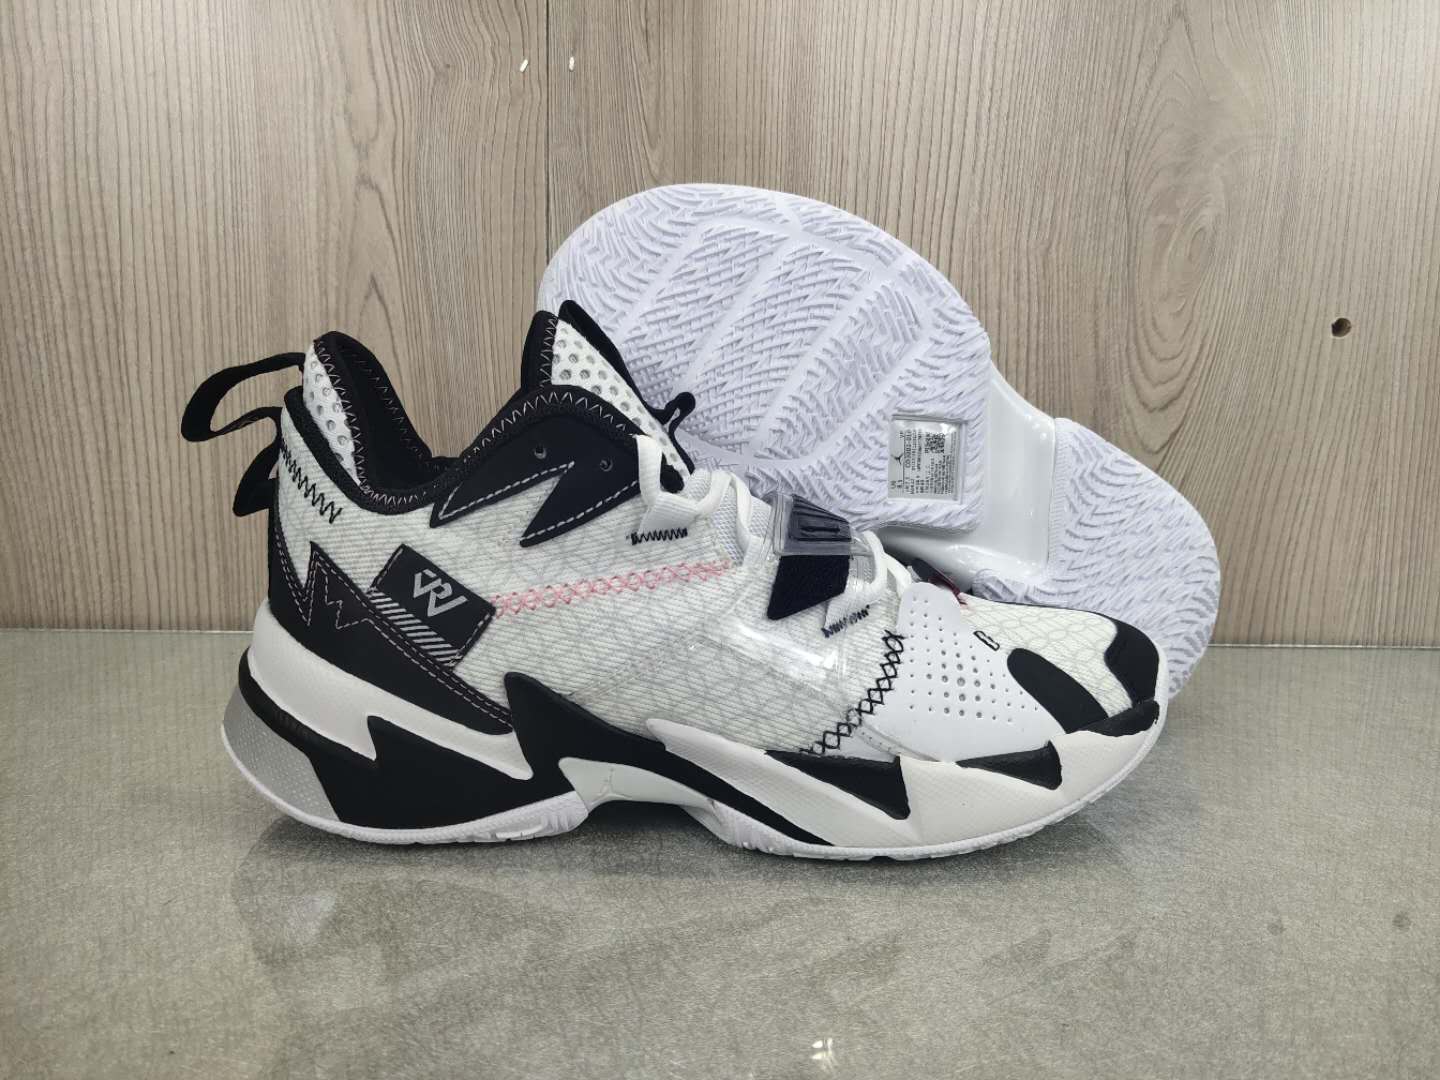 Jordan Why Not Zer0.3 White Black Shoes